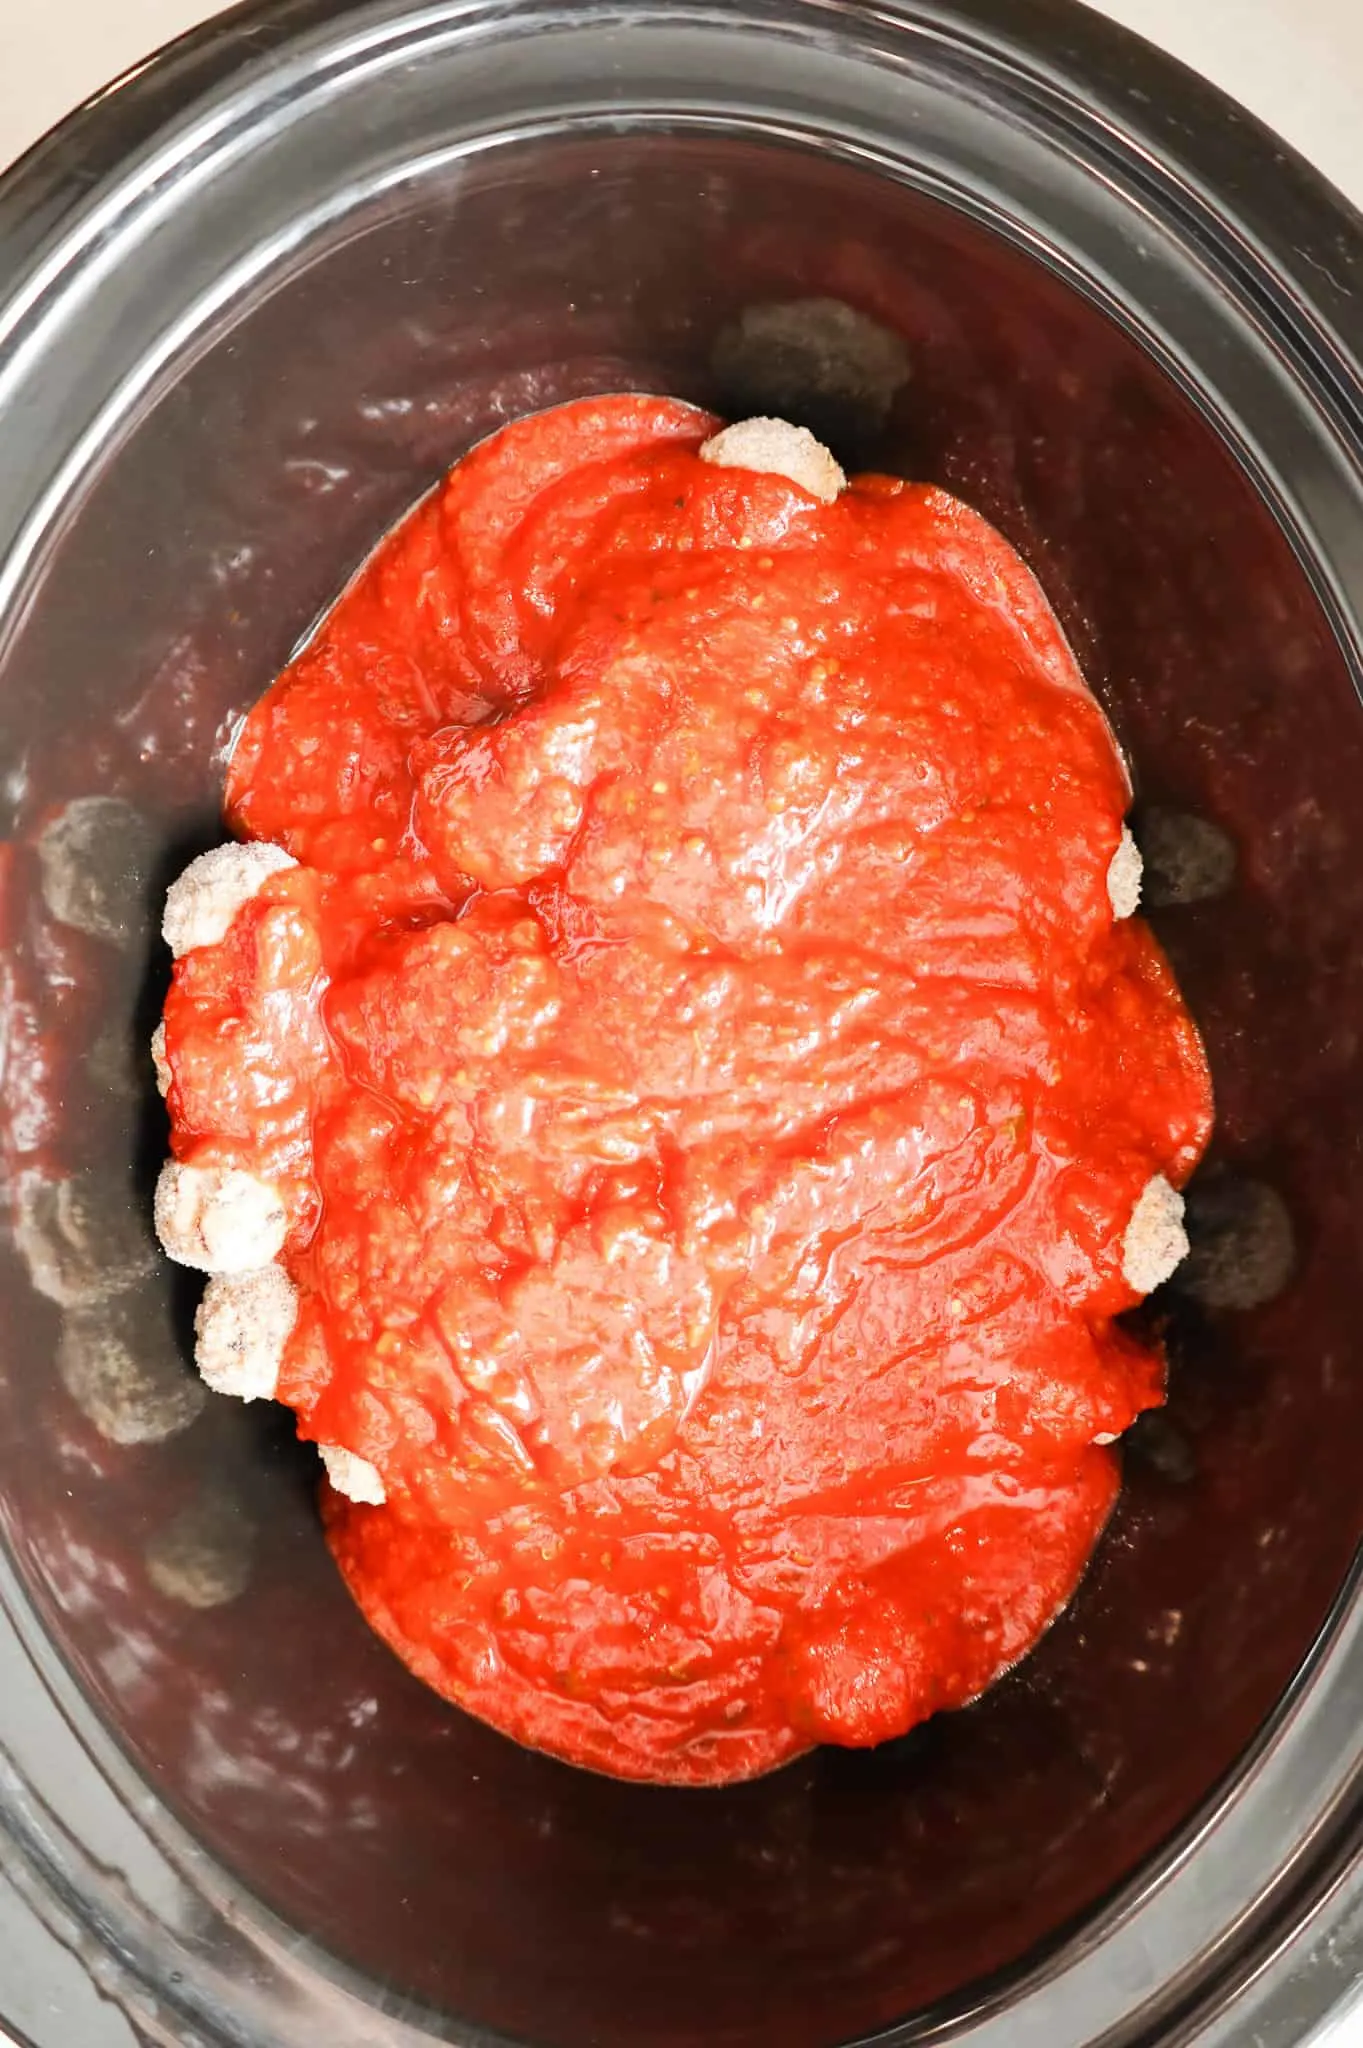 marinara sauce poured over frozen meatballs in a crock pot